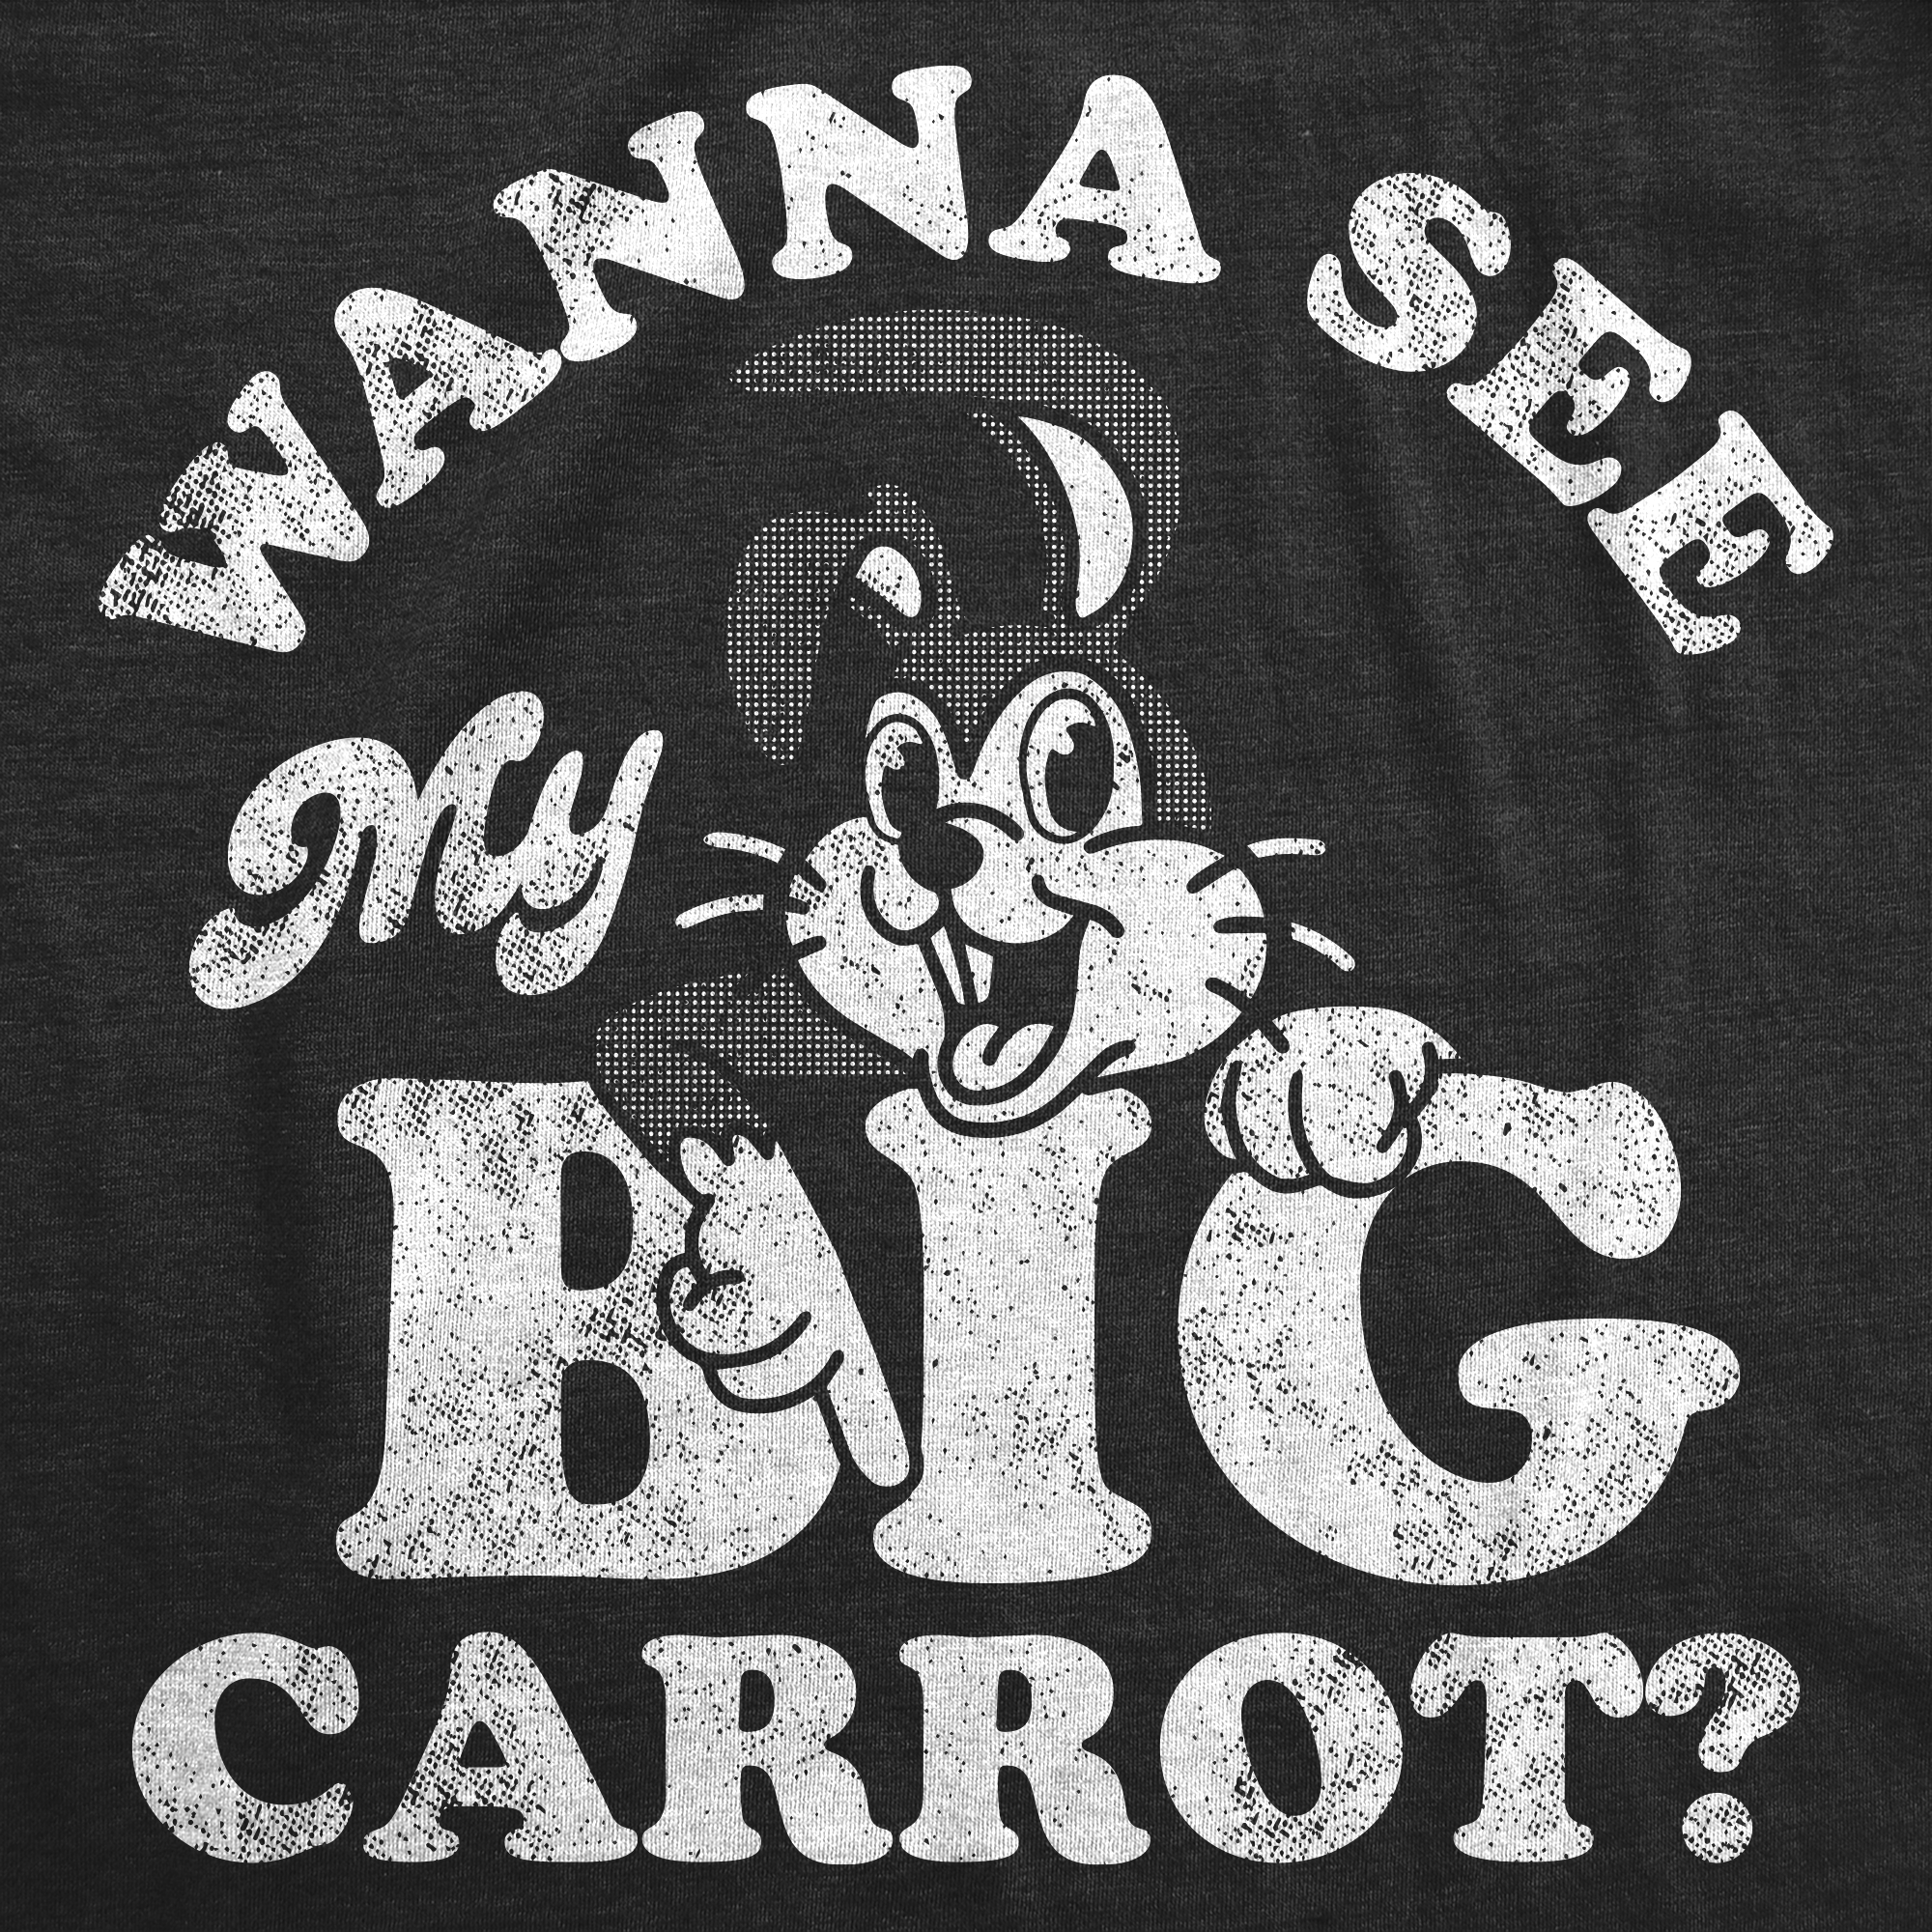 Funny Heather Black - Wanna See My Big Carrot Wanna See My Big Carrot Mens T Shirt Nerdy animal sex sarcastic Tee